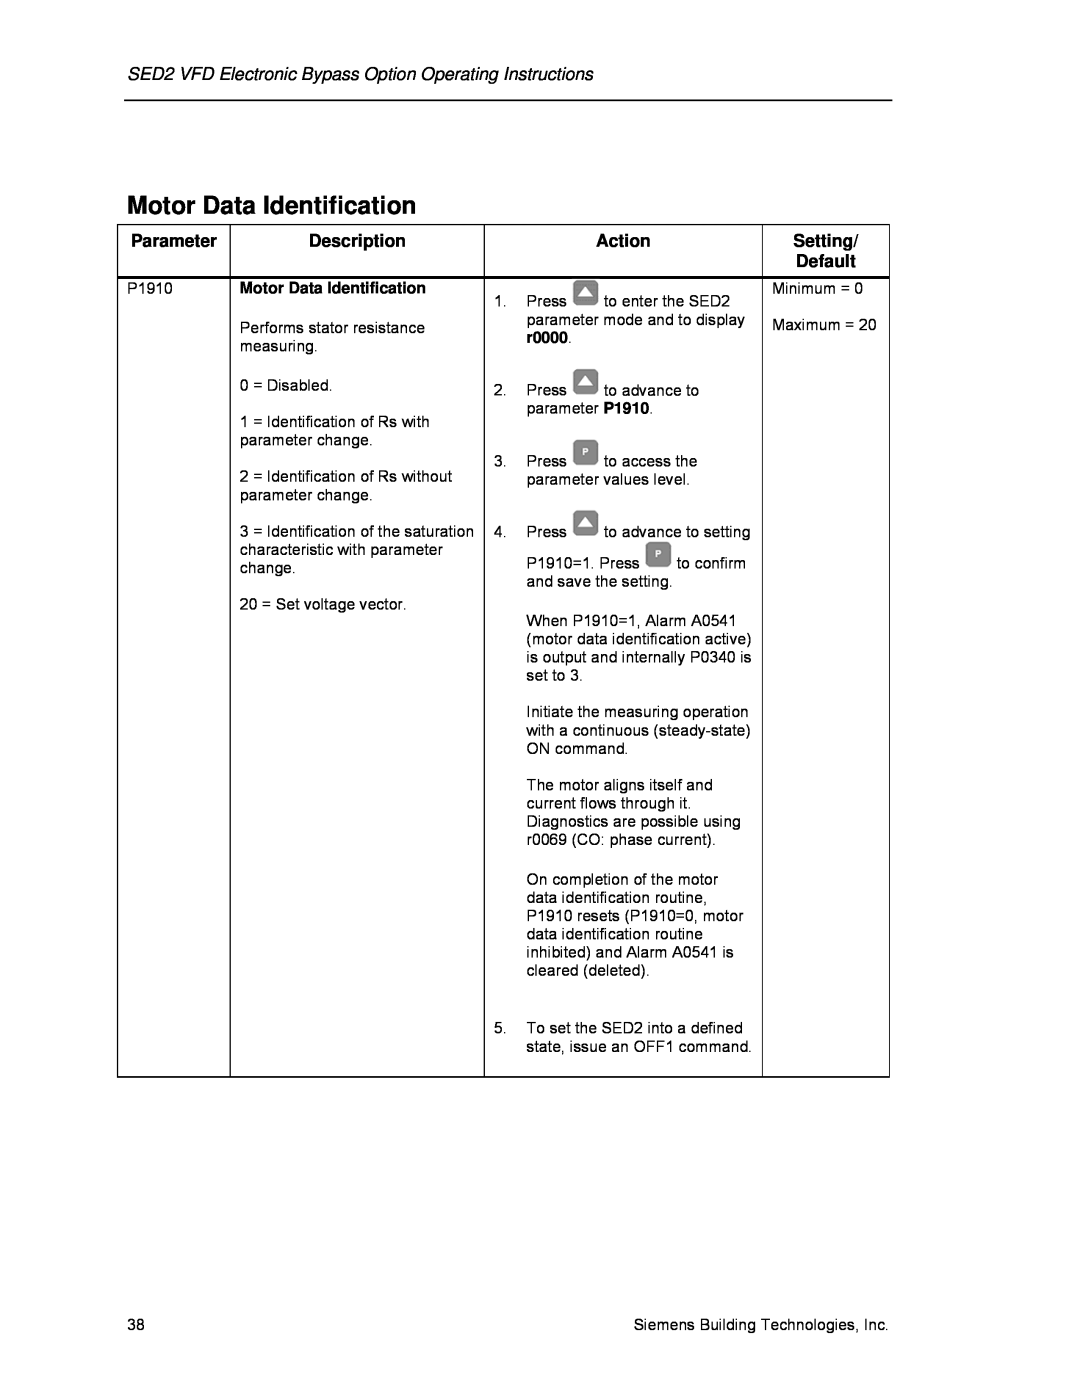 Siemens 125-3208 operating instructions Motor Data Identification, r0000 